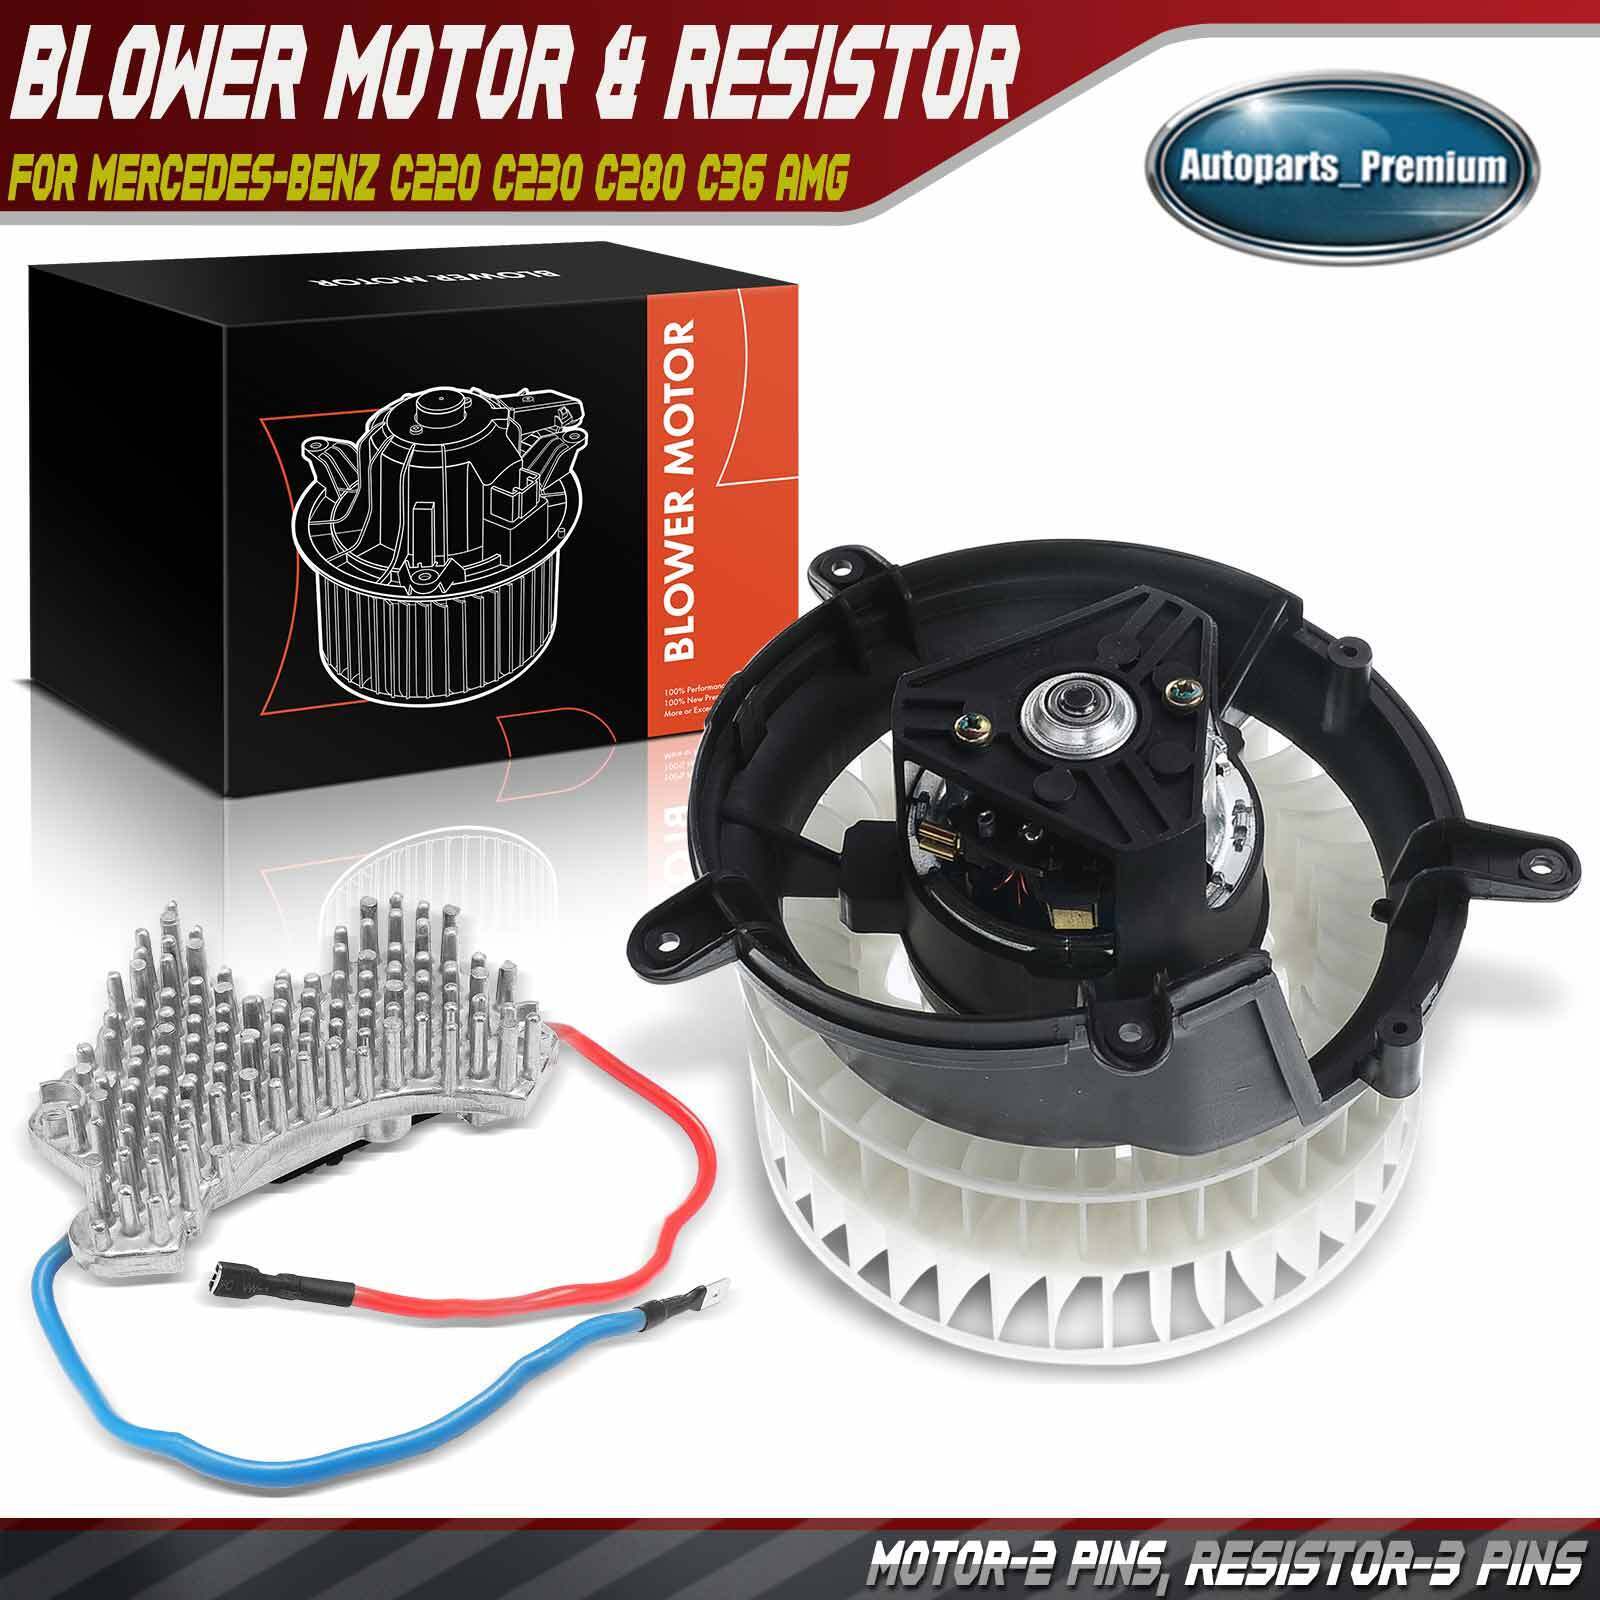 Front HVAC Blower Motor & Resistor Kit for Mercedes-Benz C220 C230 C280 C36 AMG